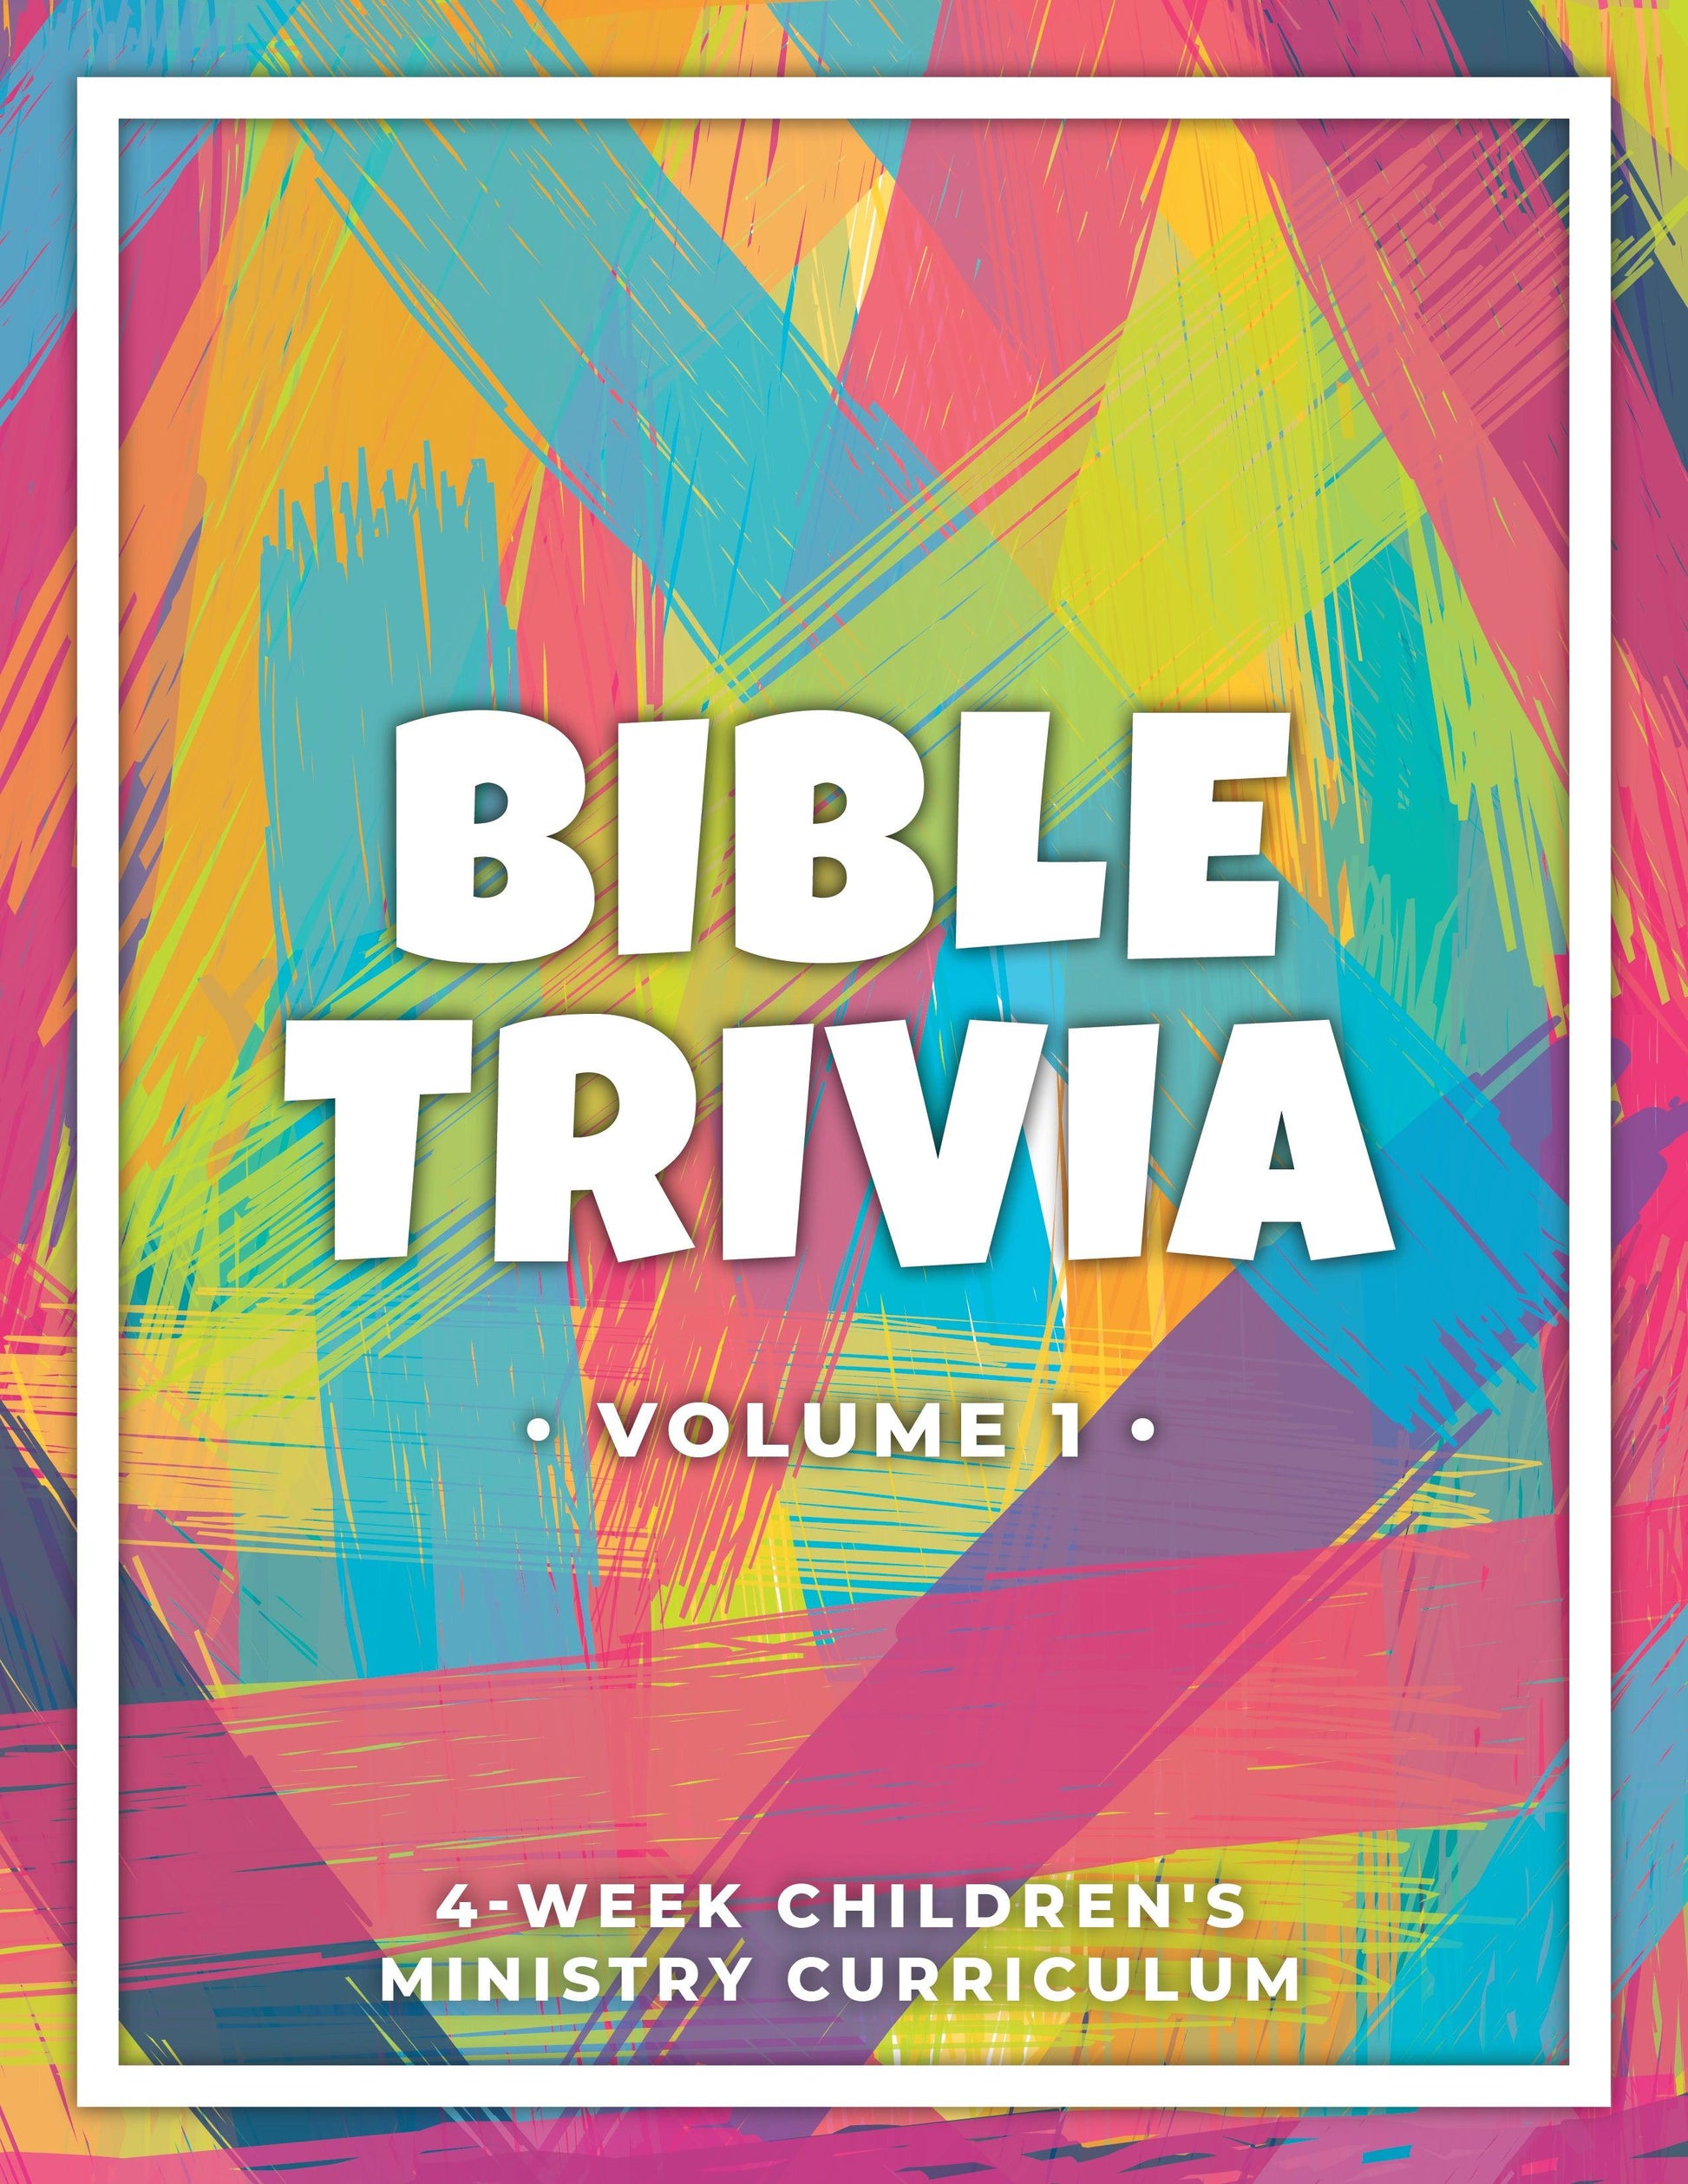 Bible Trivia Volume 1 (Old Testament) 4-Week Children’s Ministry Curriculum - Sunday School Store 